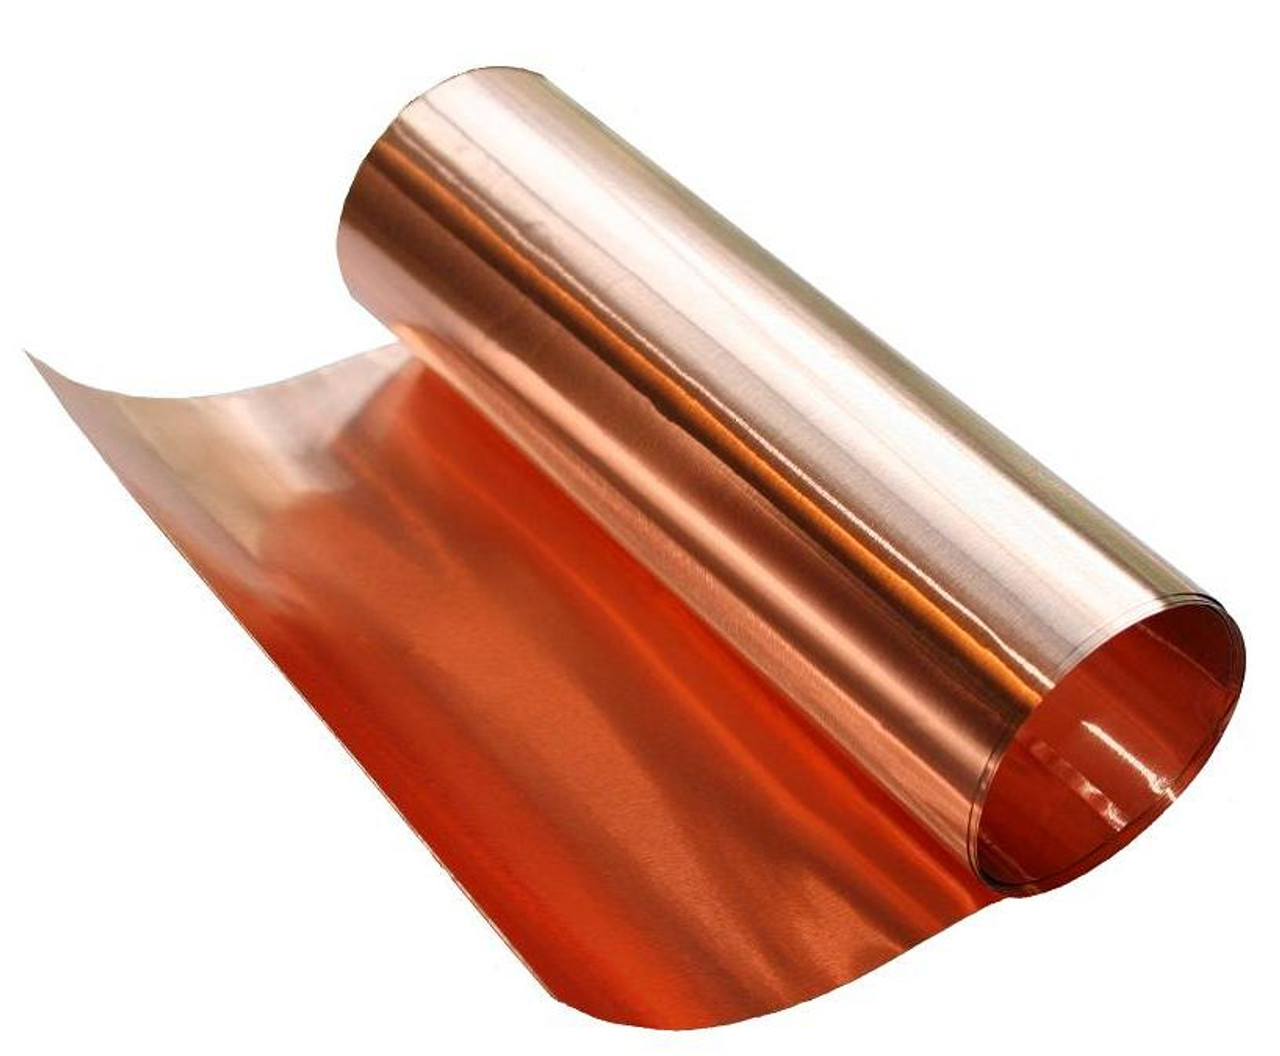 Copper Metallic Foil Fusing Rolls - Best Quality, Best Price per